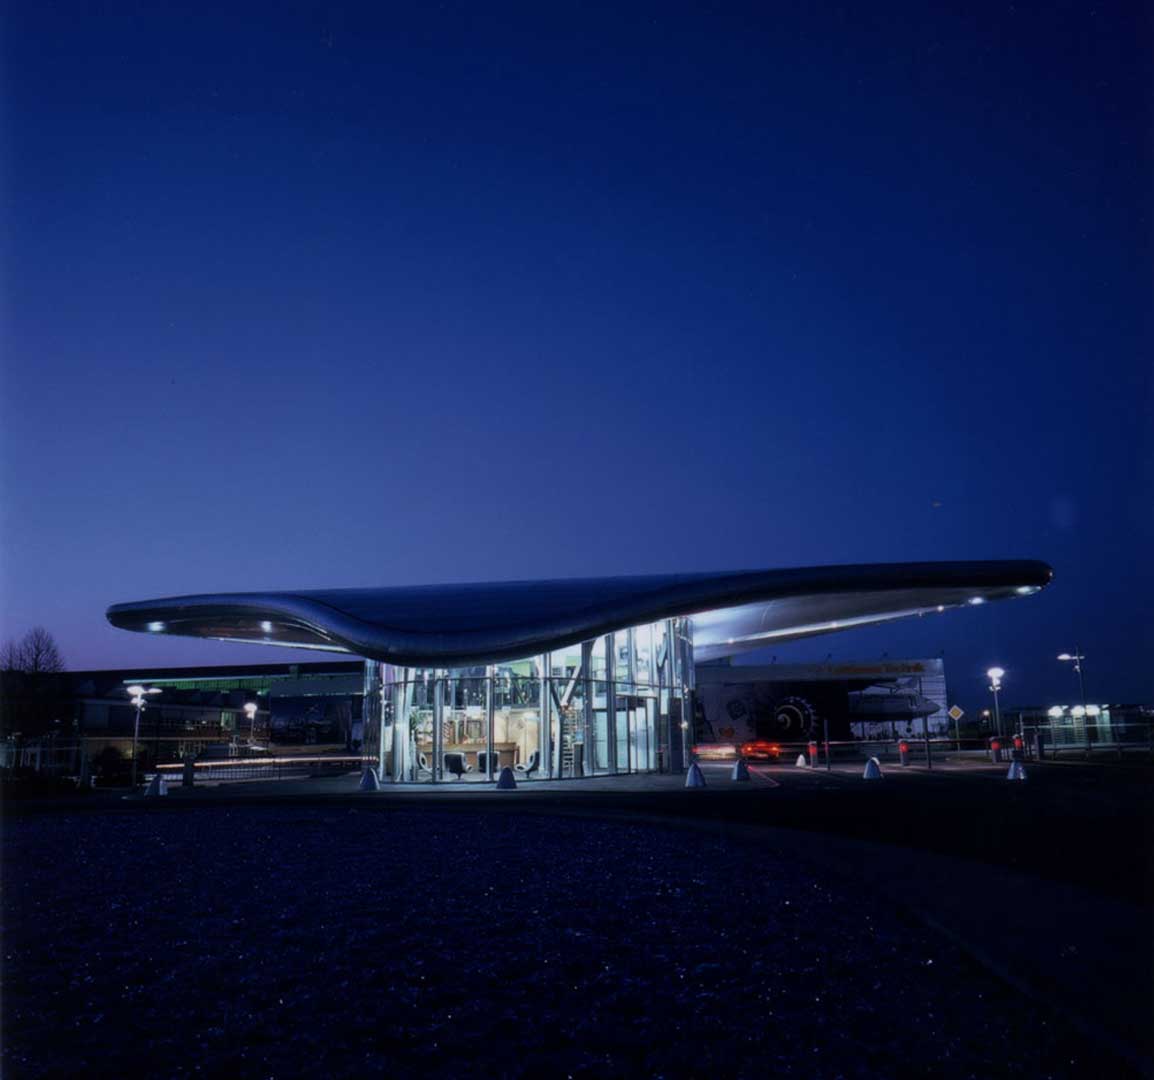 Galeriebild / Lufthansa Basis Hamburg,Lighting design of the reception building and the outdoor facilities